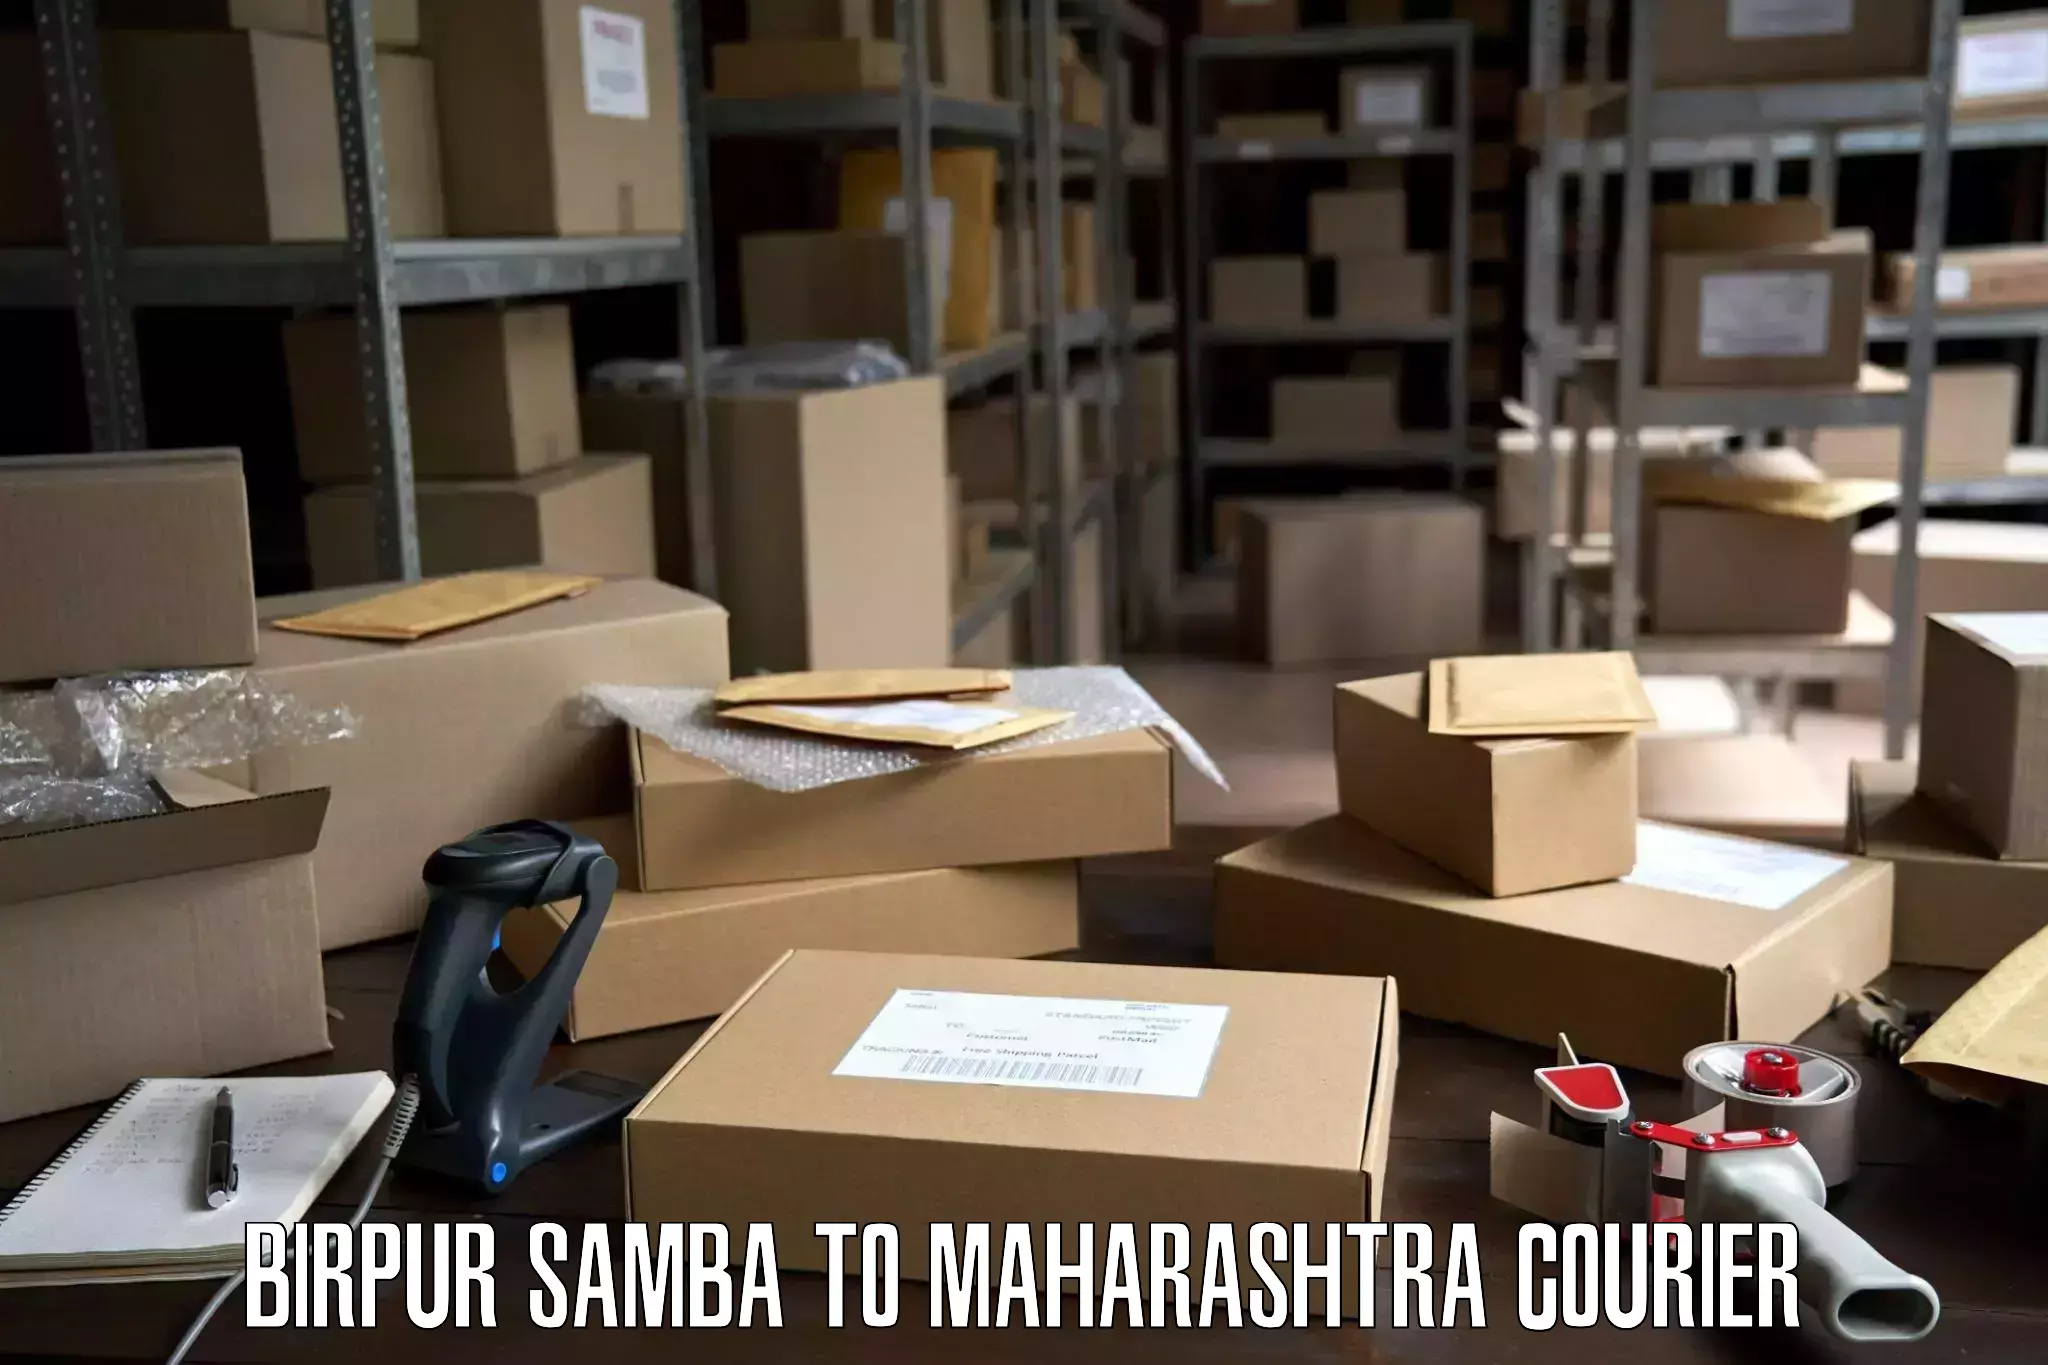 Furniture relocation experts Birpur Samba to Maharashtra